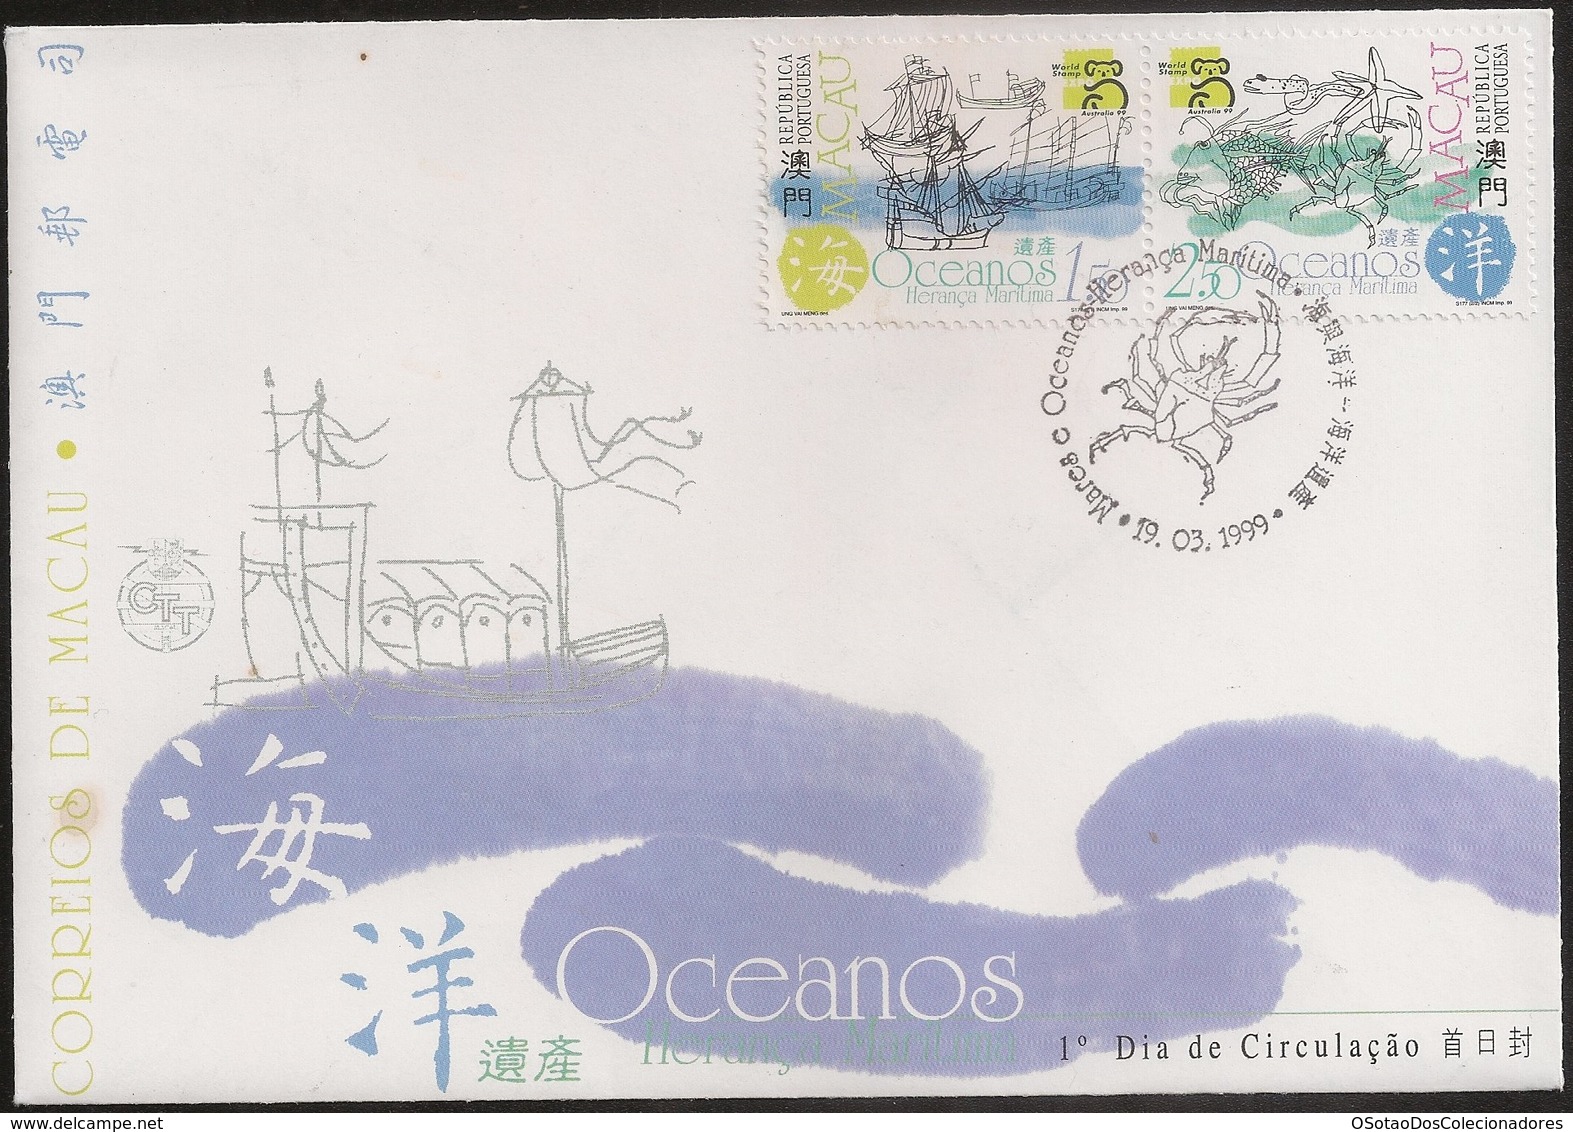 Macau Macao Chine FDC 1999 - Mares E Oceanos Herança Maritima - Stamp Exhibition Oceans And Maritime Heritage - MNH/Neuf - FDC